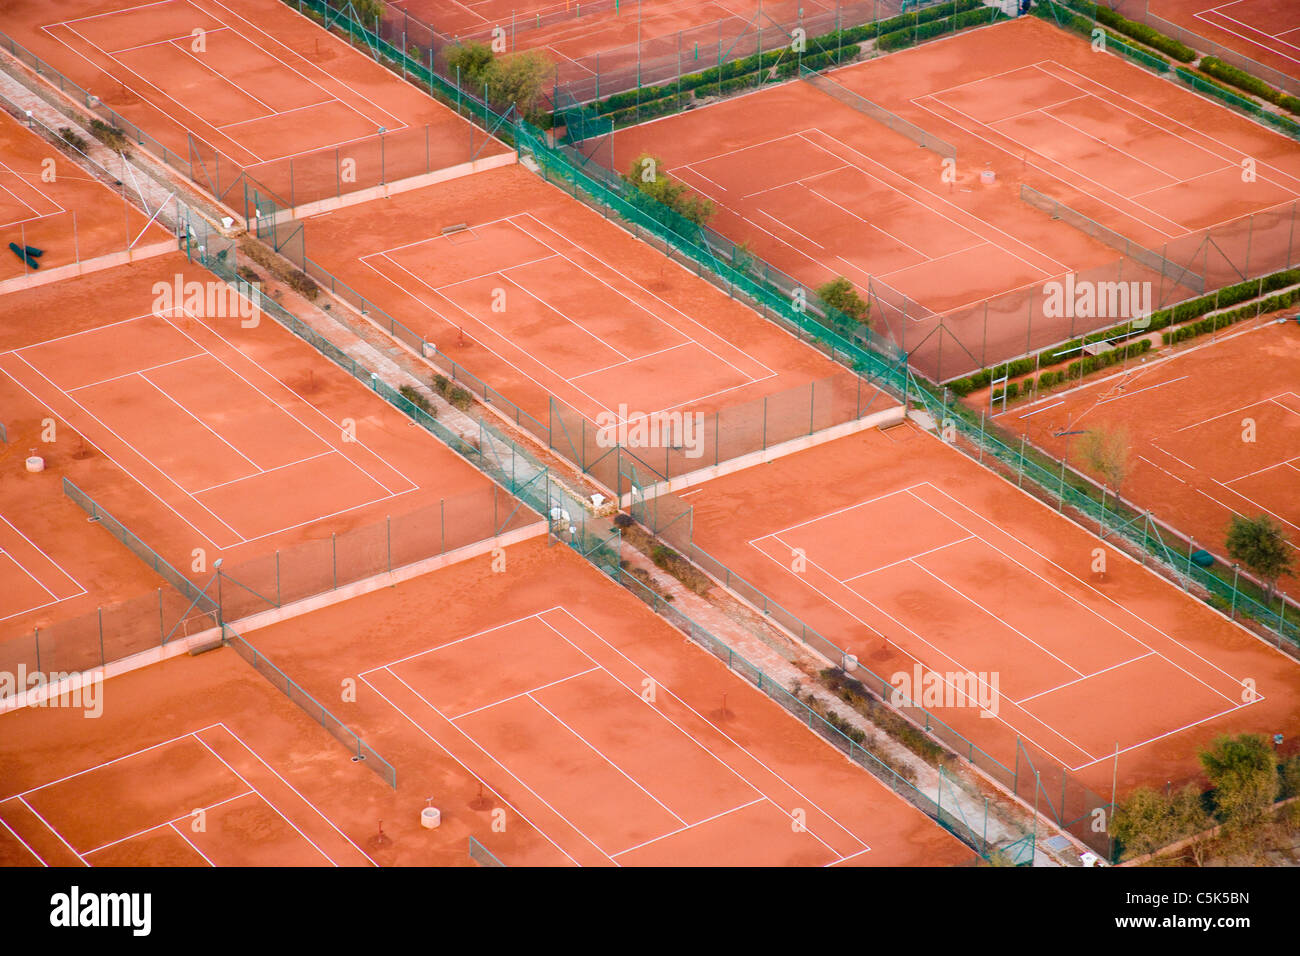 Vue aérienne de tennis à Belek, Antalya, Turquie Photo Stock - Alamy